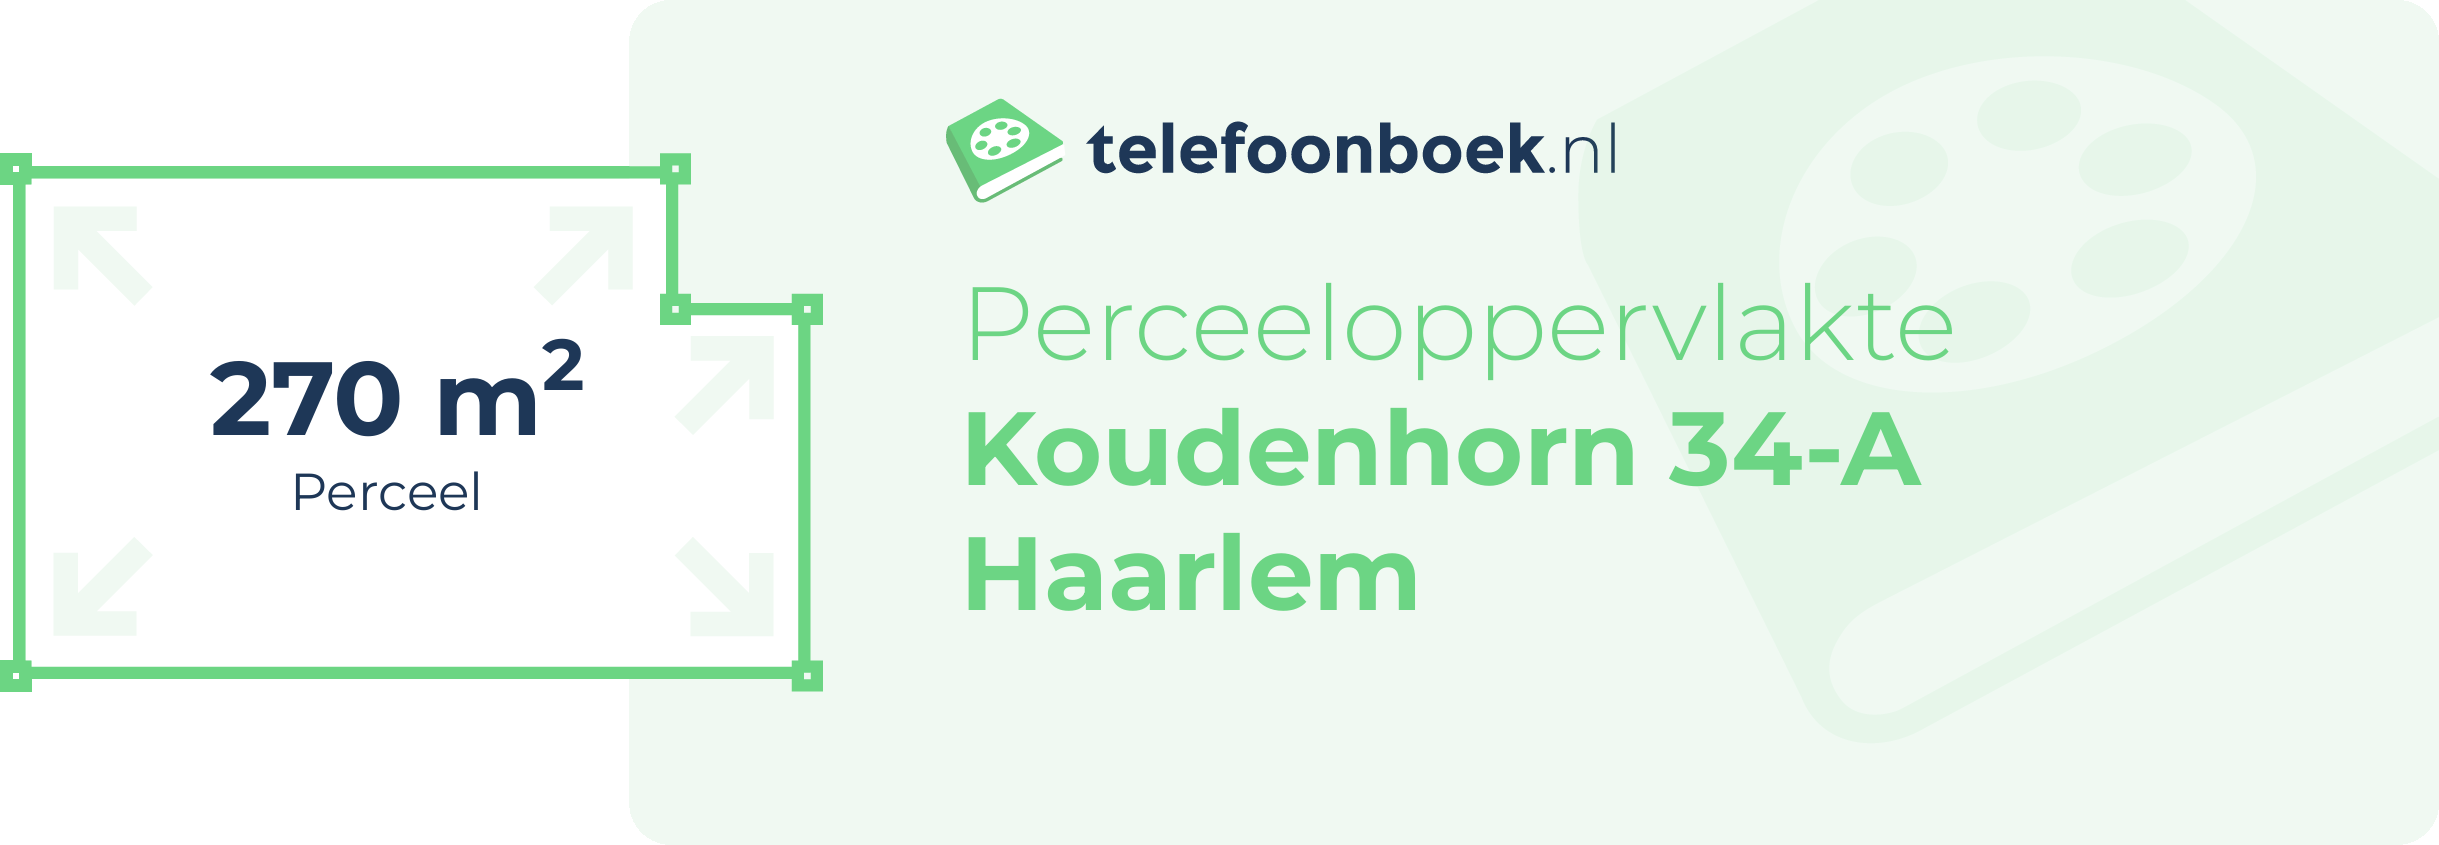 Perceeloppervlakte Koudenhorn 34-A Haarlem